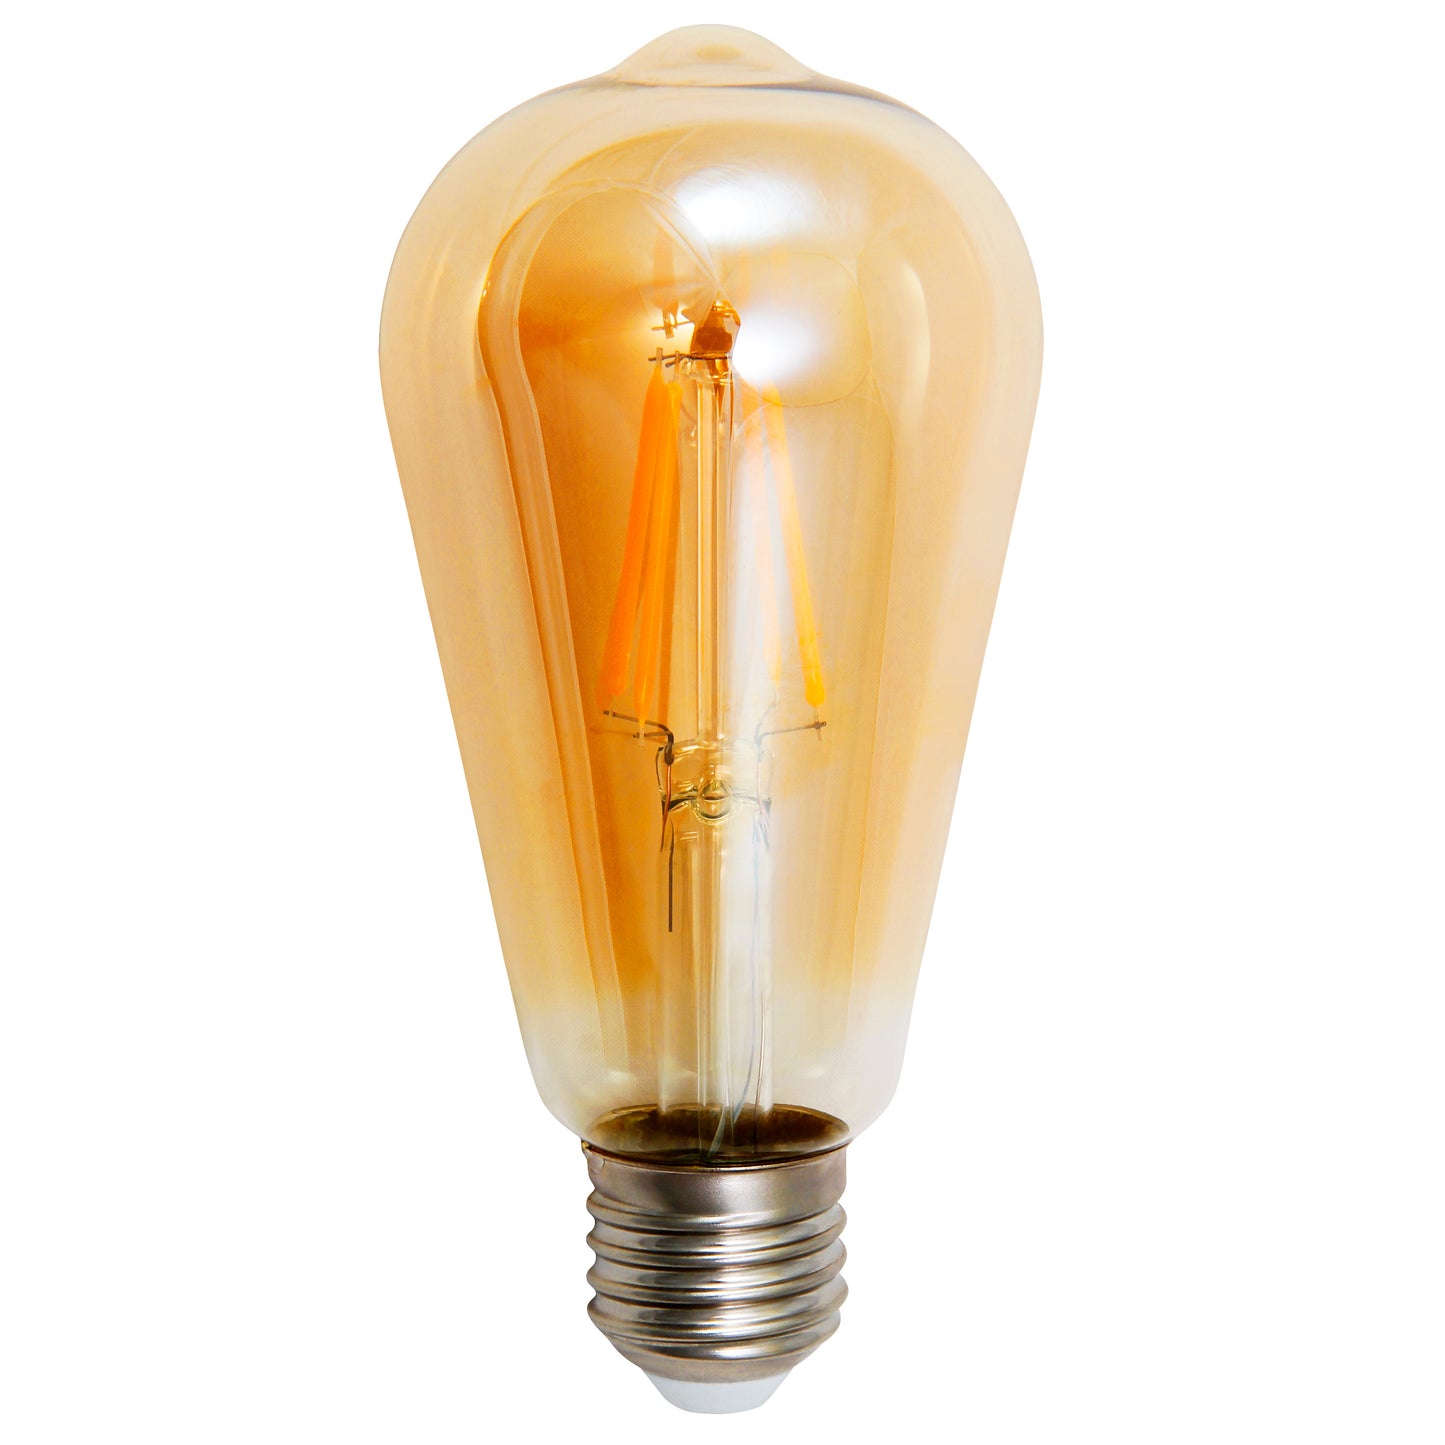 5x Retro LED Filament Glühbirne E27 ST64 4W Vintage Lampe Glas Warmweiß 400lm